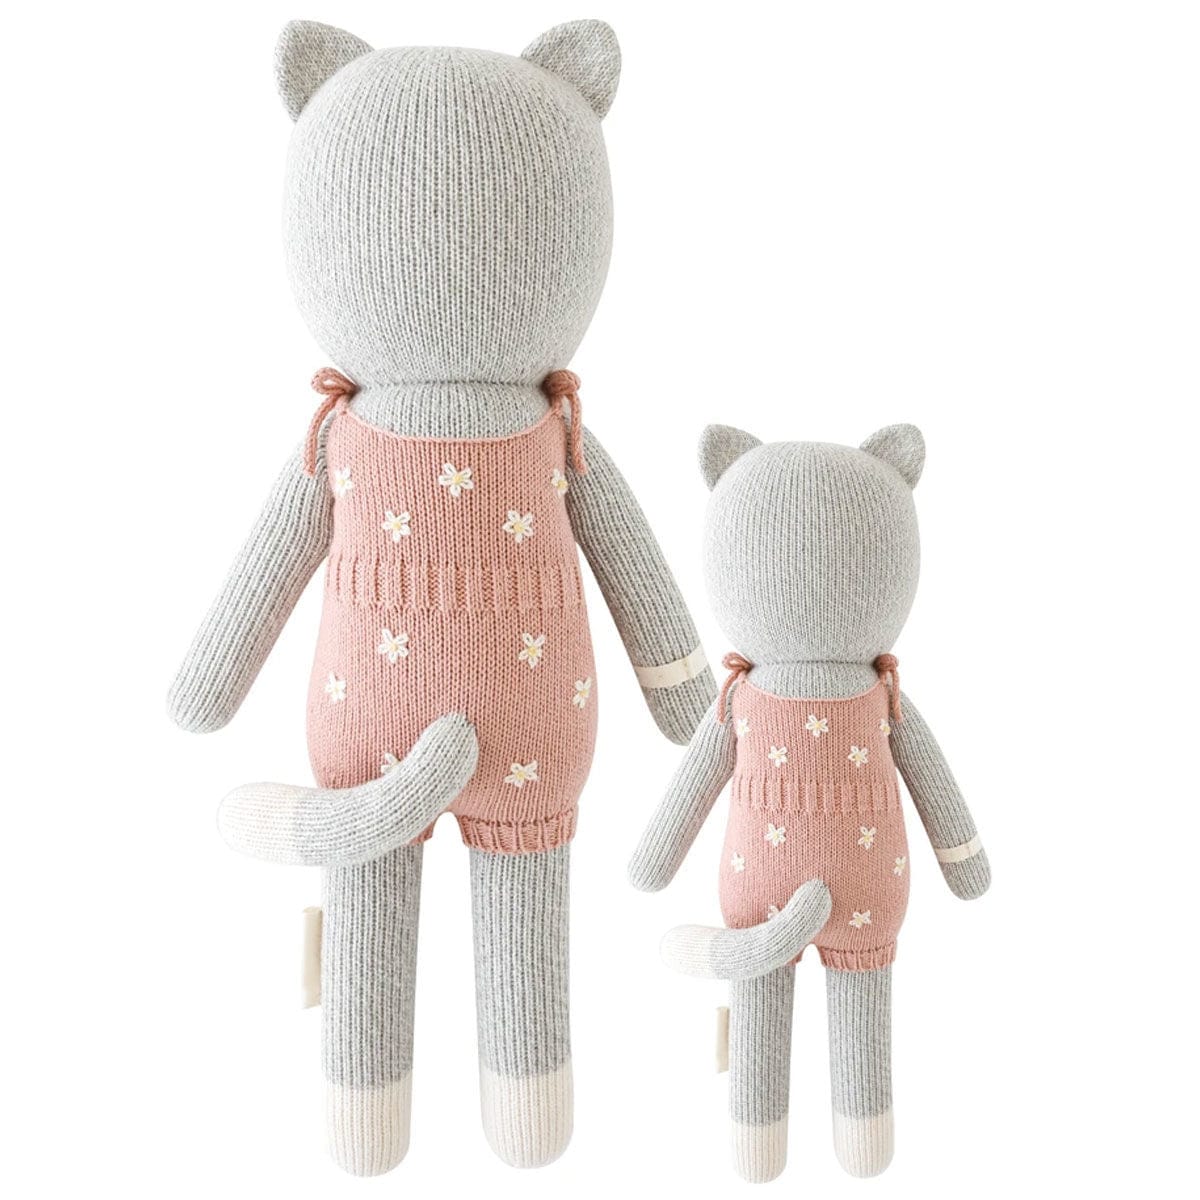 cuddle + kind doll cuddle + kind Hand-Knit Doll - Daisy the Kitten